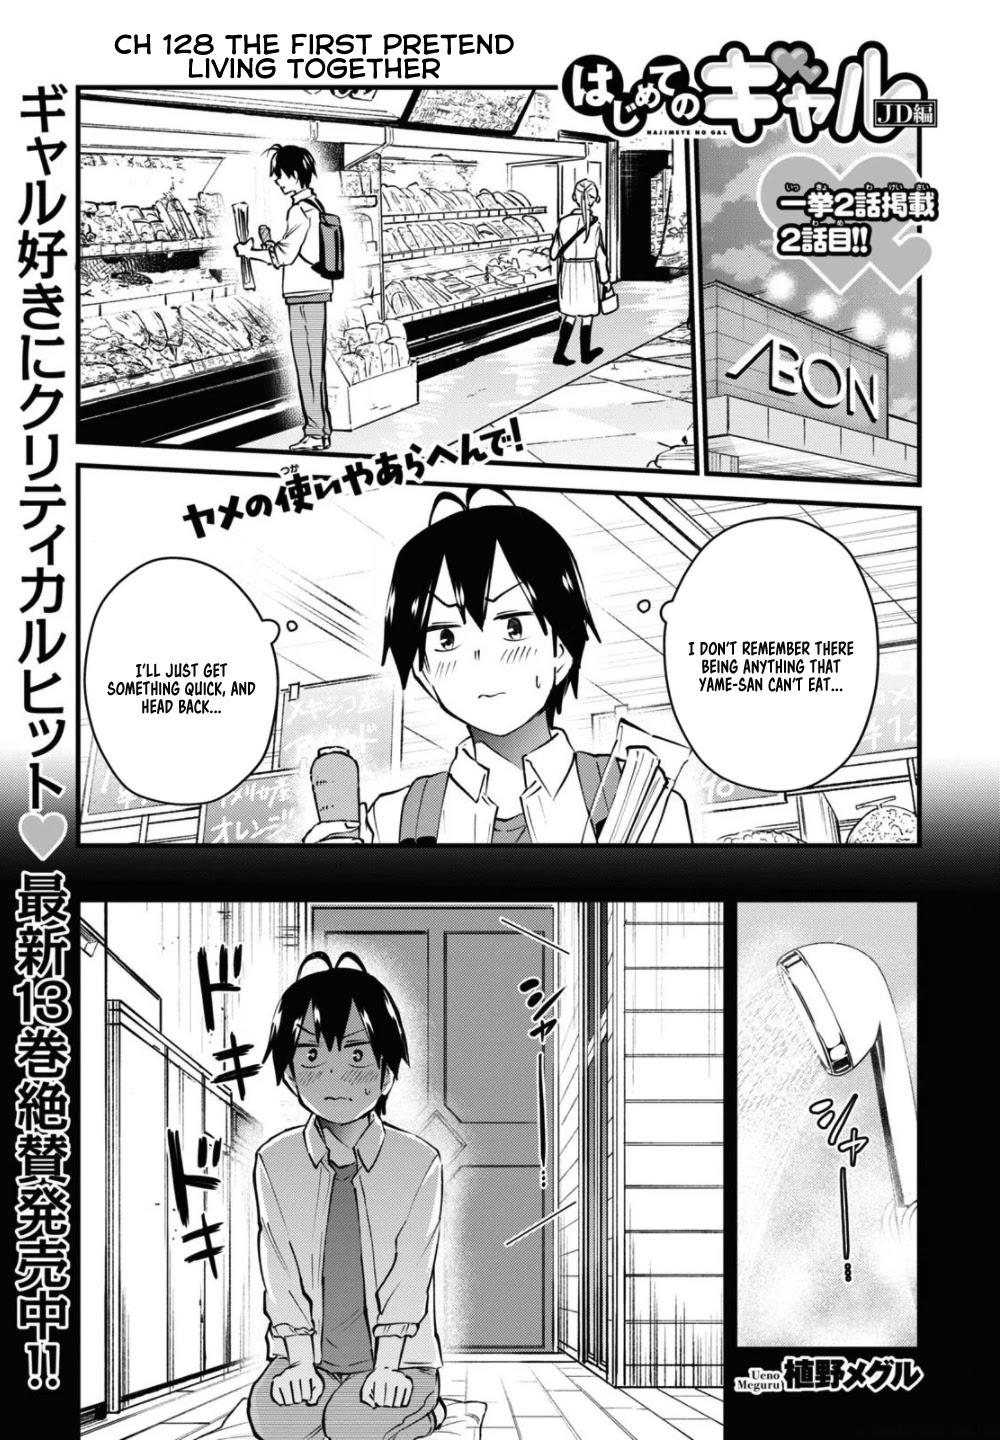 Read Hajimete No Gal Chapter 30 on Mangakakalot